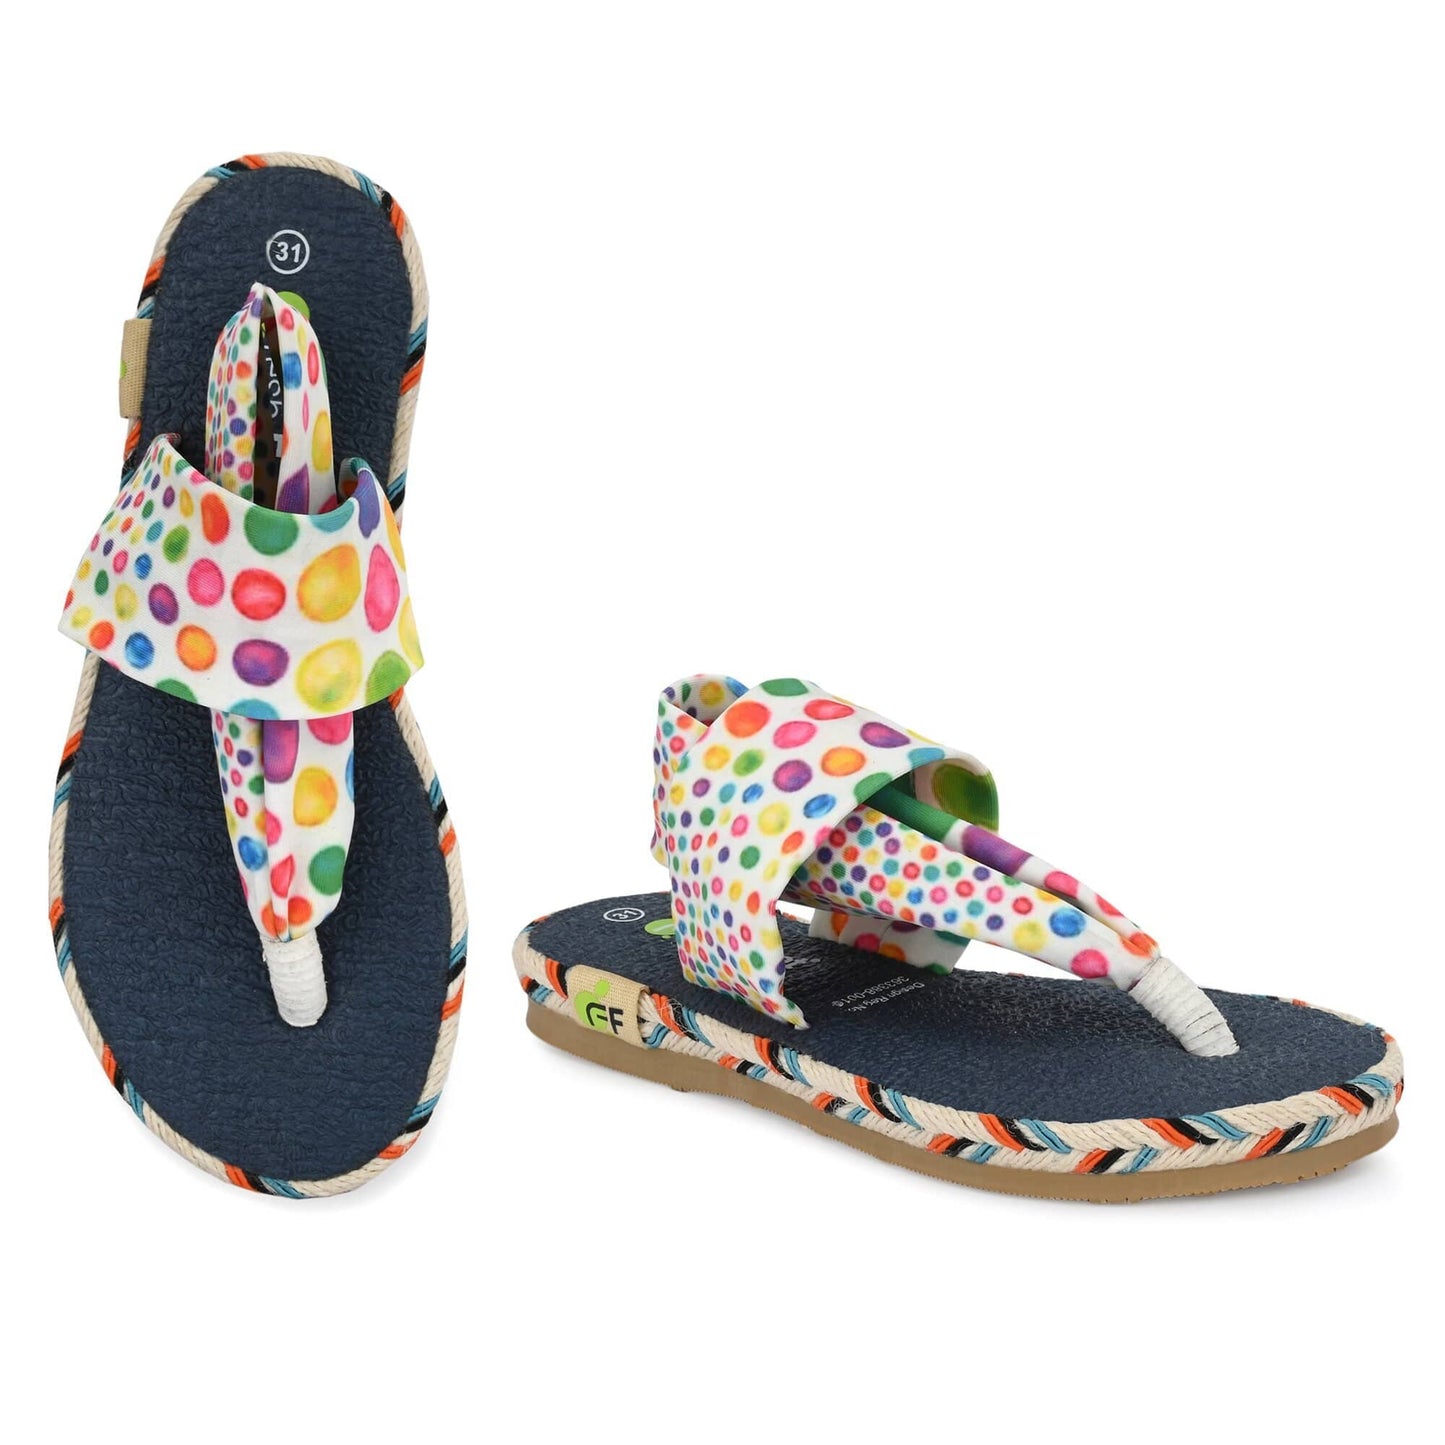 Cinderella Bubble Print Sandals for Kids